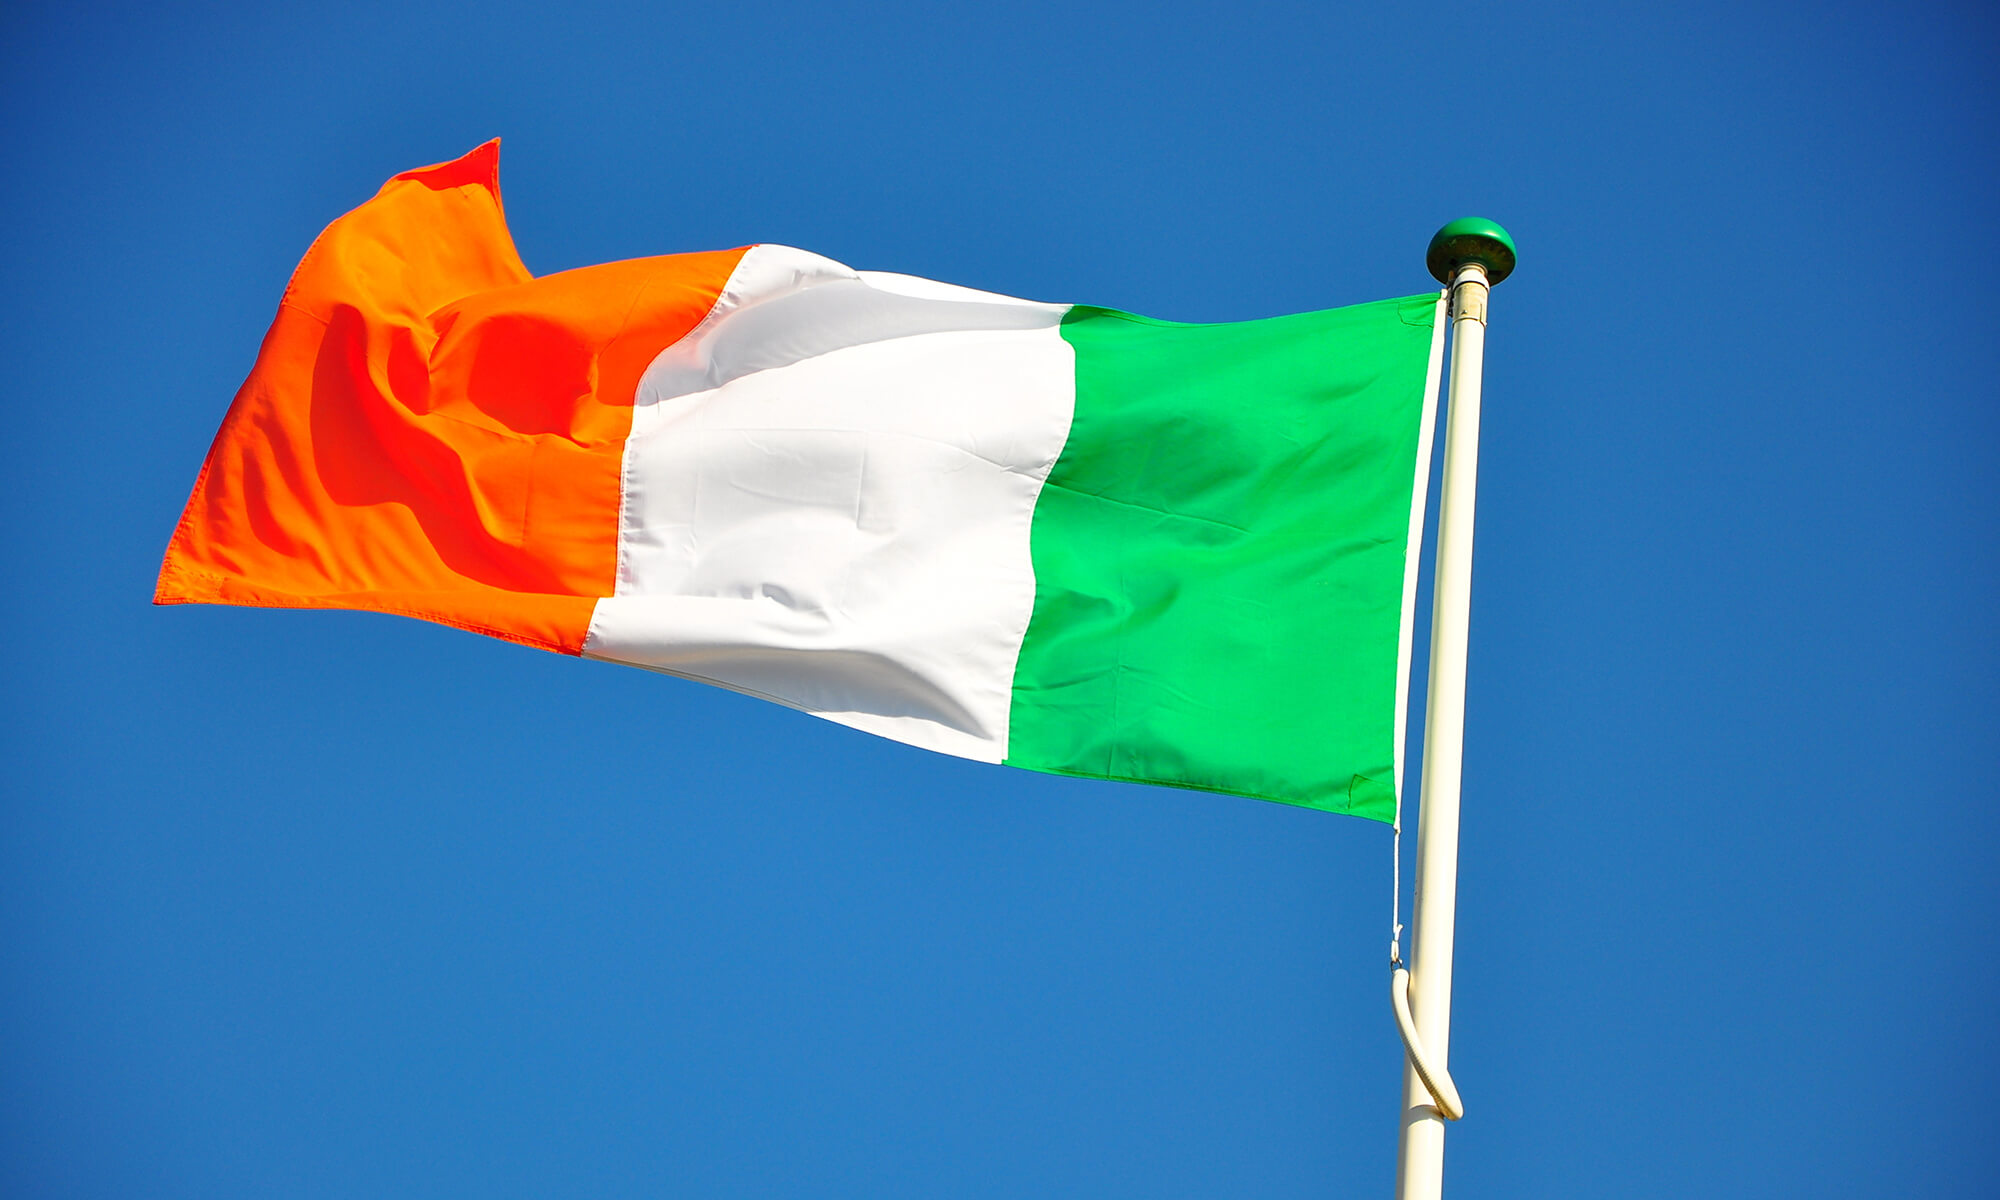 Ireland flag - colors, meaning, & history of Irish flag